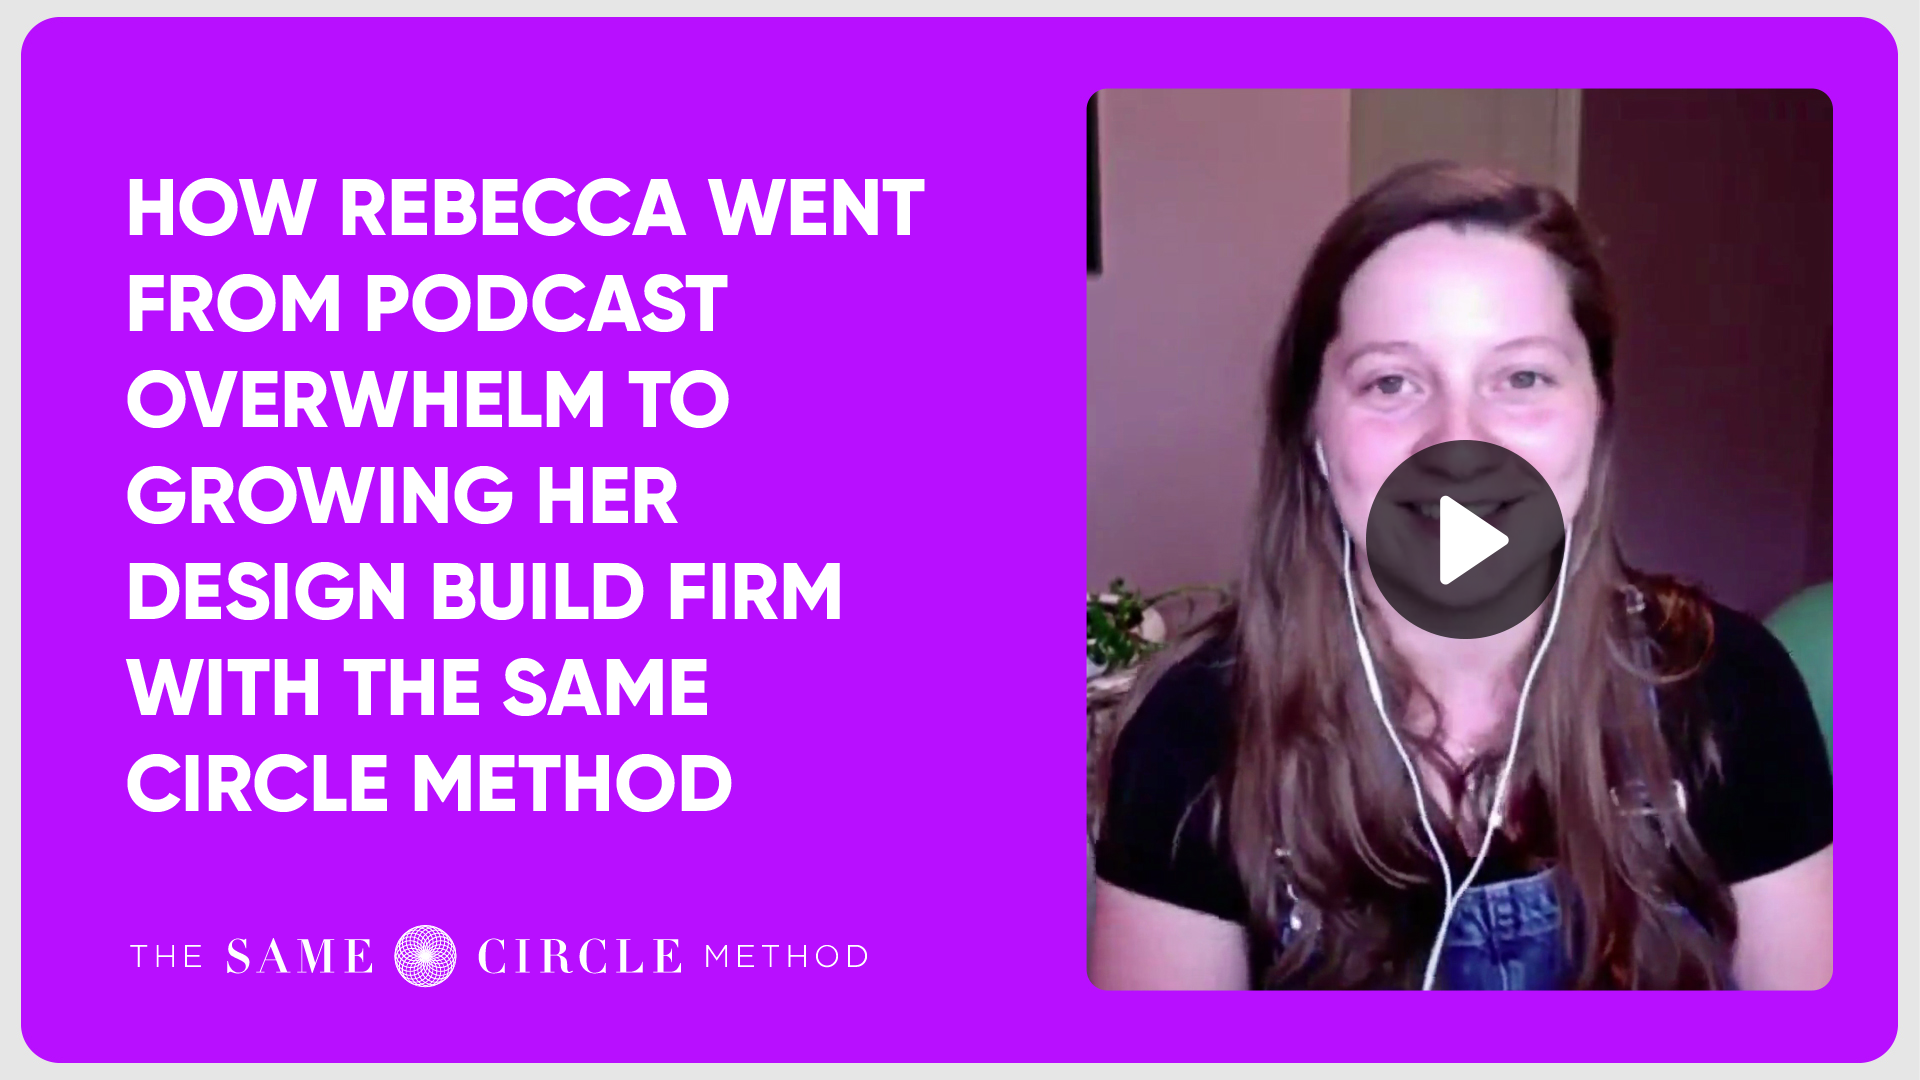 Becca Video Testimonial